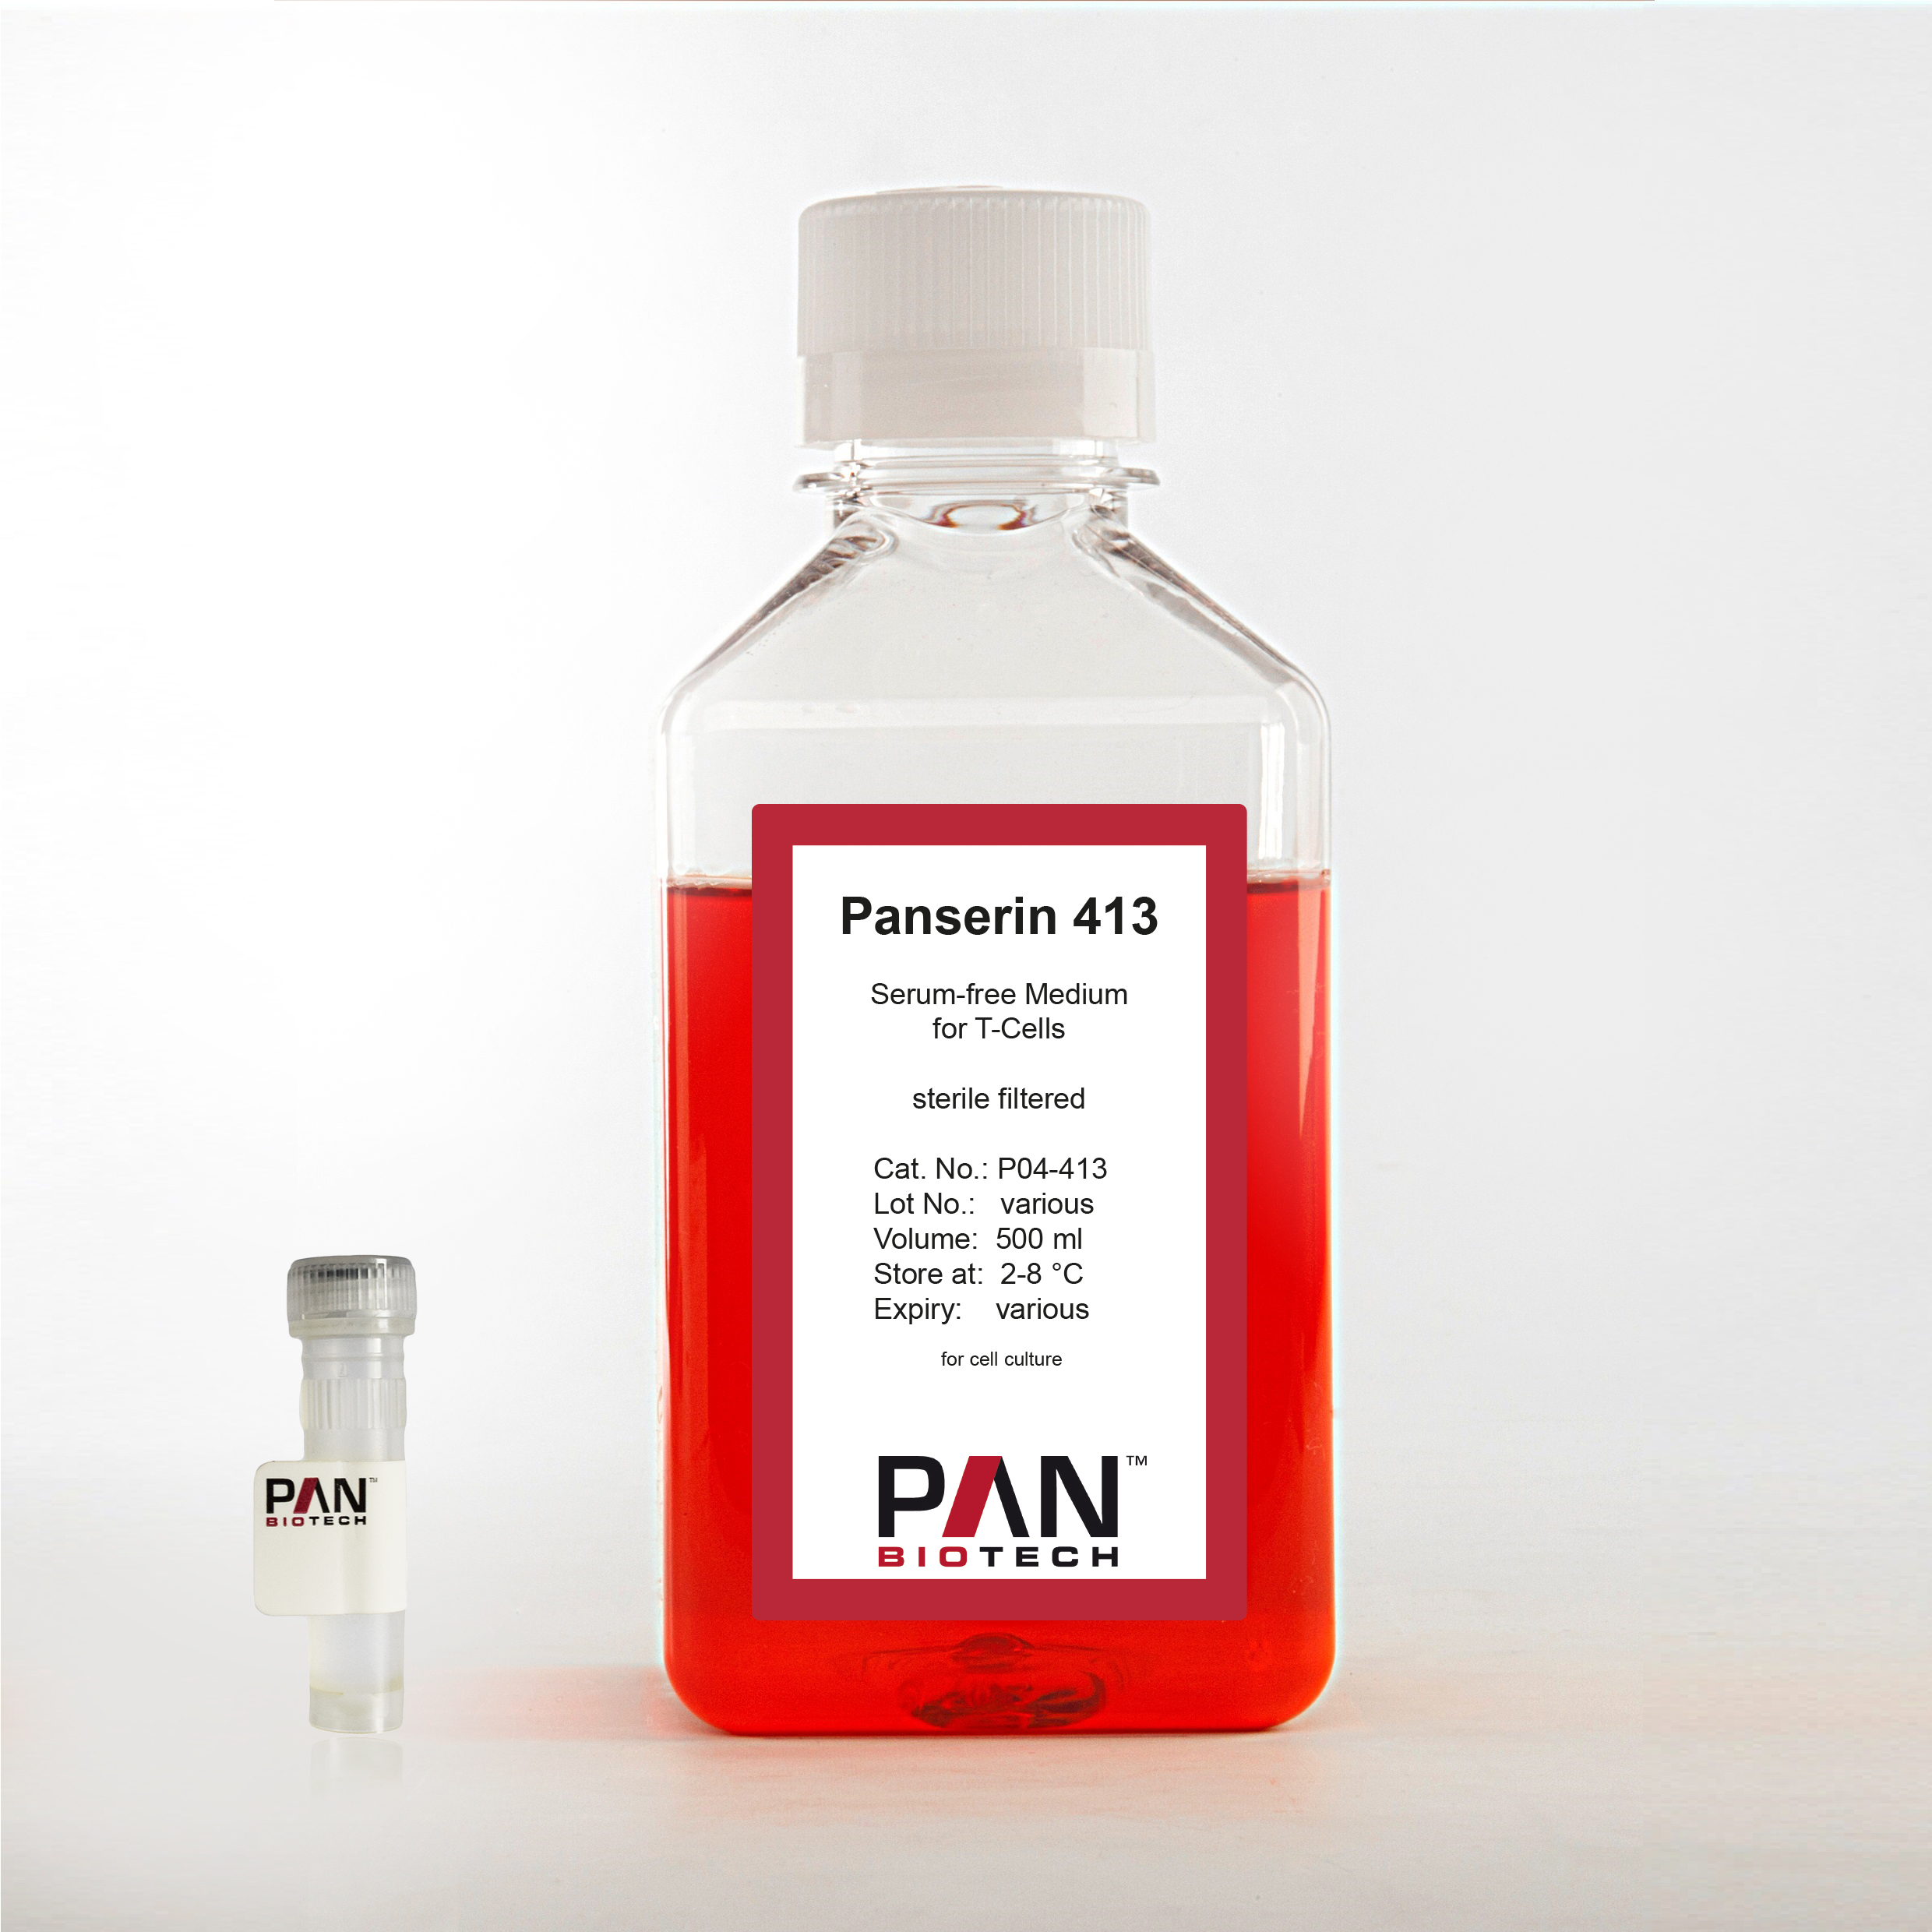 Panserin 413, Serum-free Medium for T-Cells, w: 1 Supplement